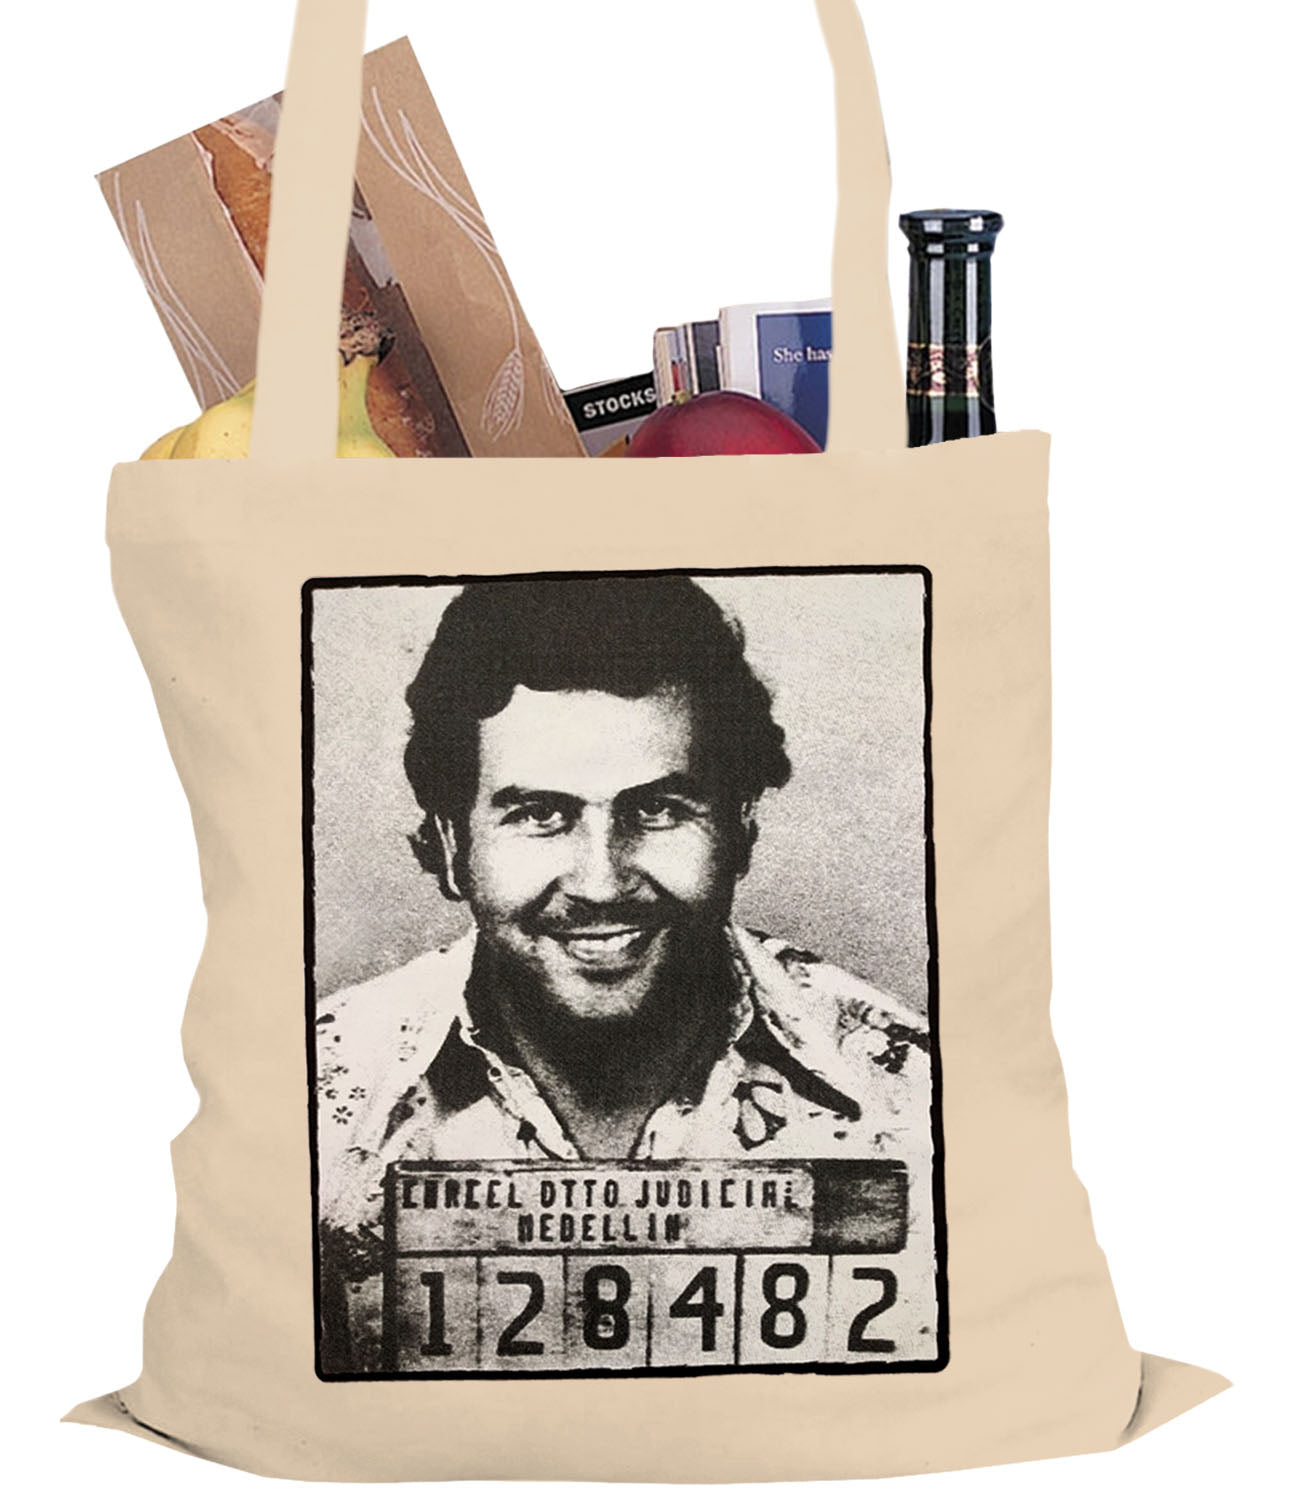 Pablo Escobar Smiling Mug Shot Tote Bag